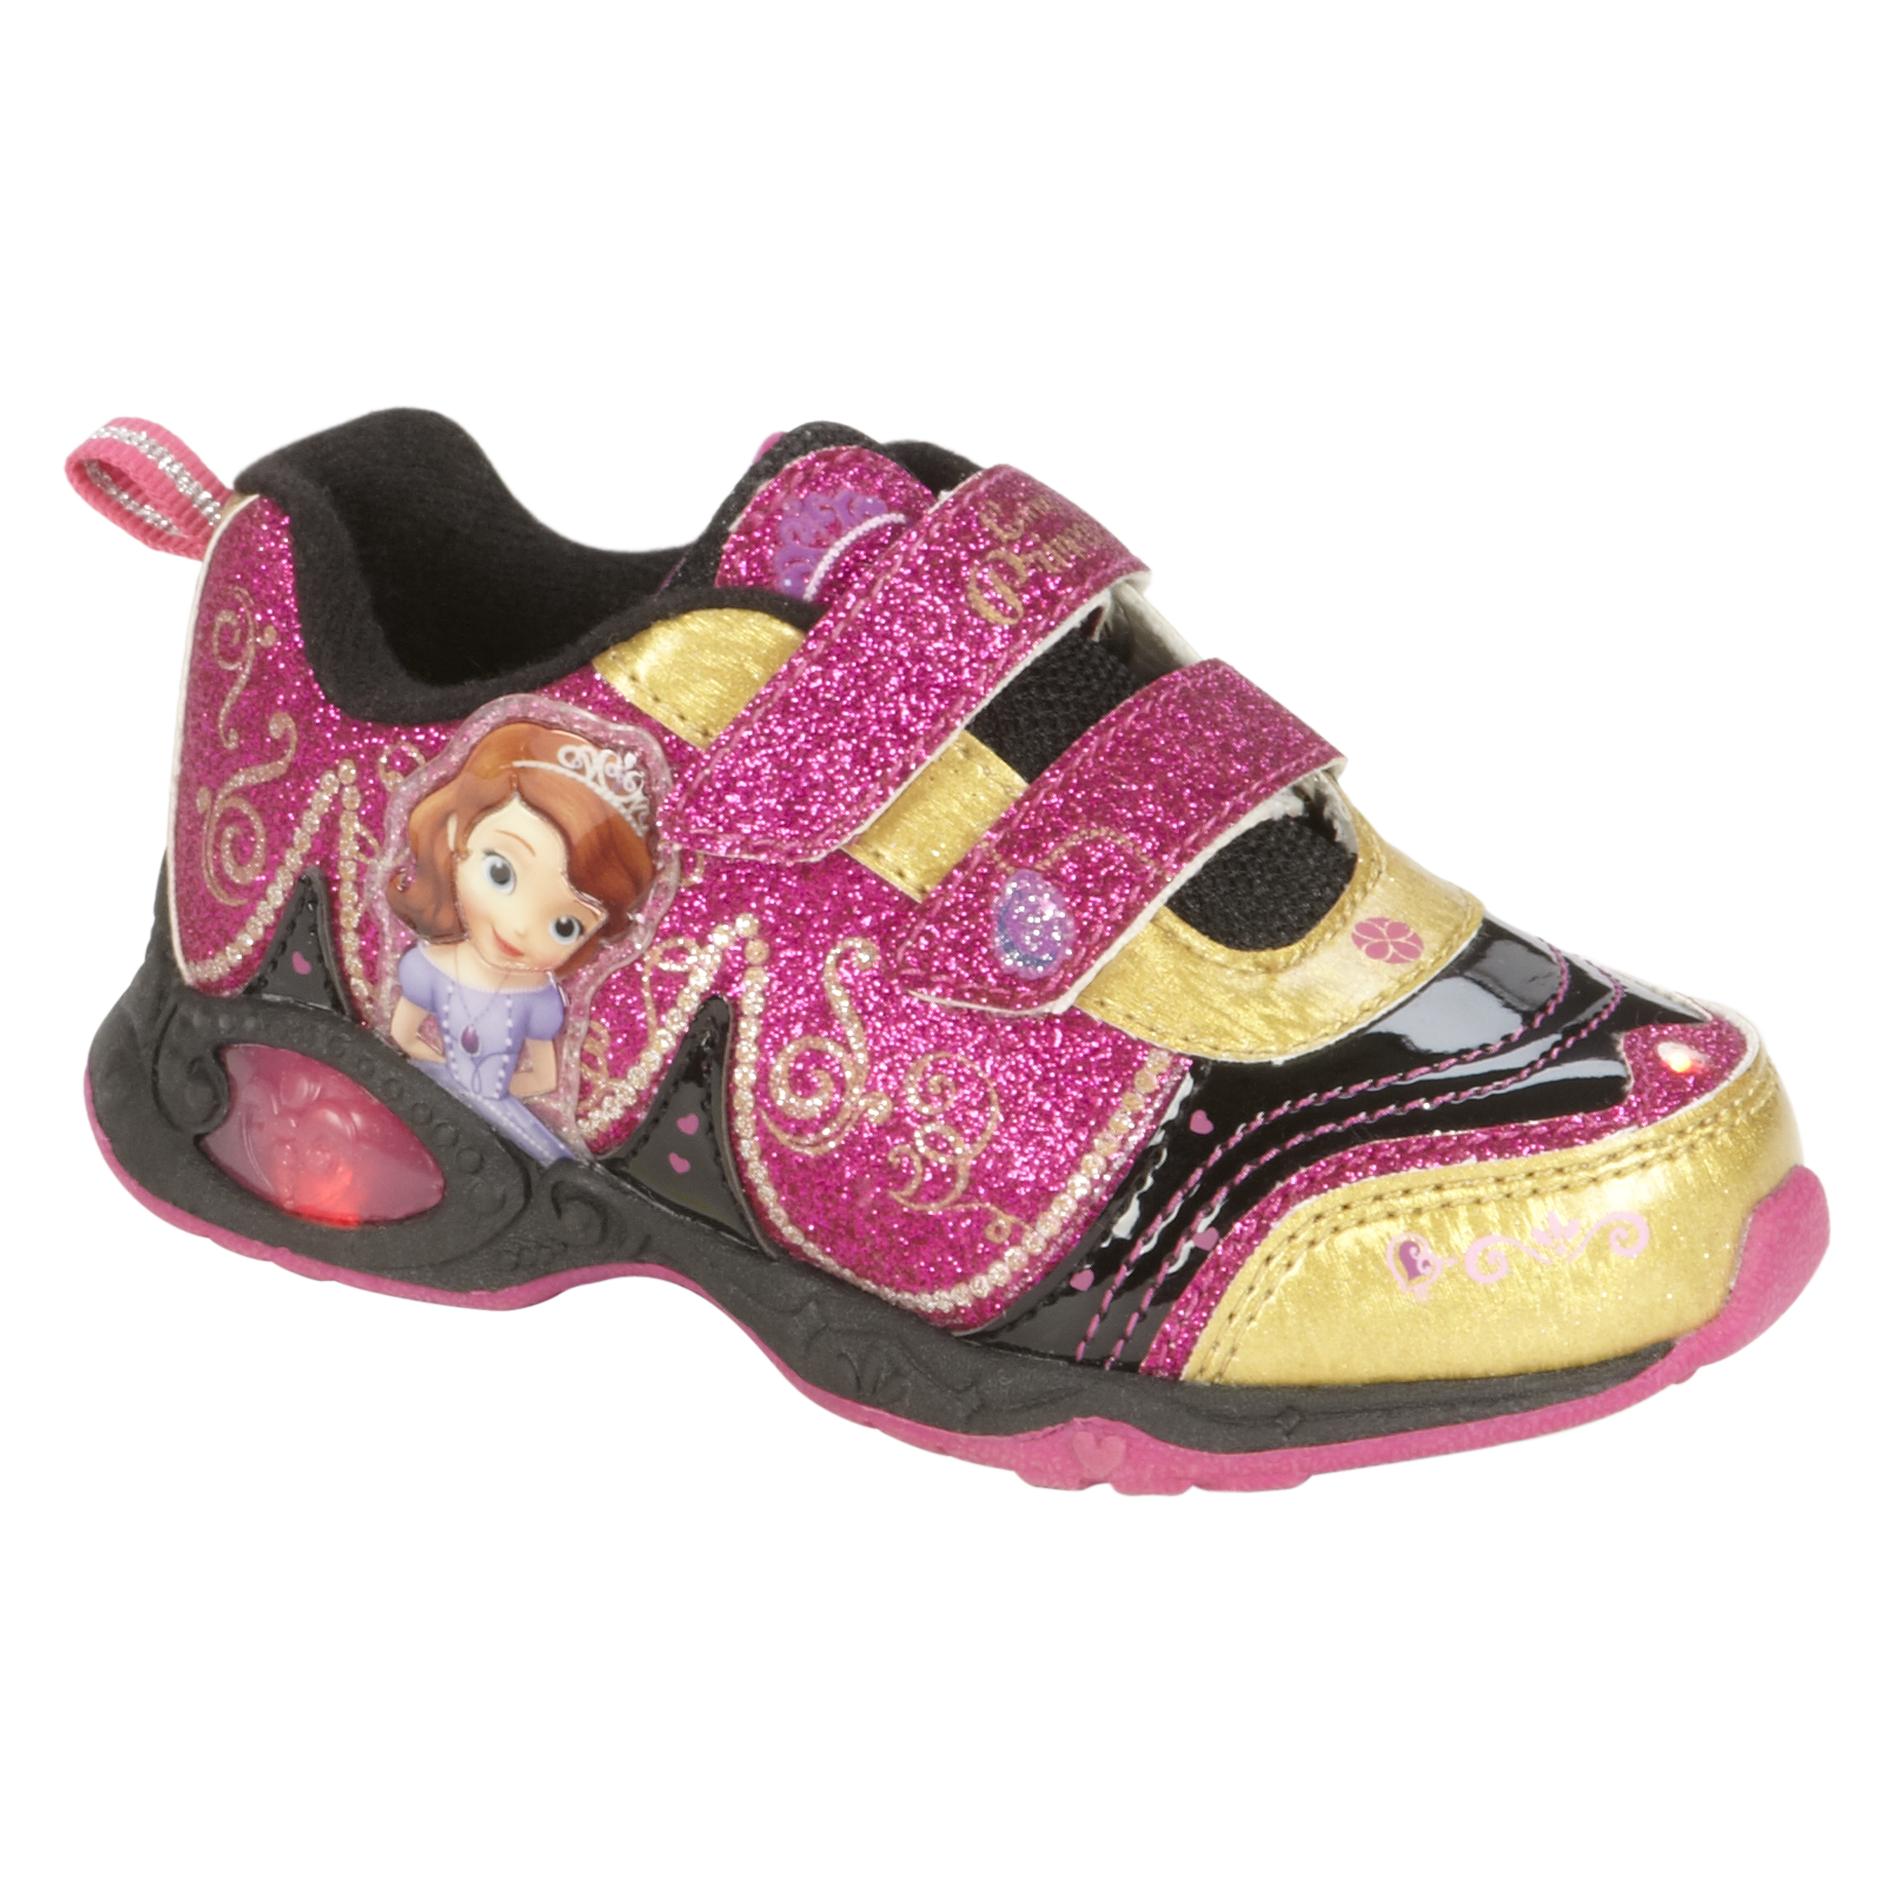 Disney Girls' Toddler Princess Sofia Black/Gold/Pink Sneakers